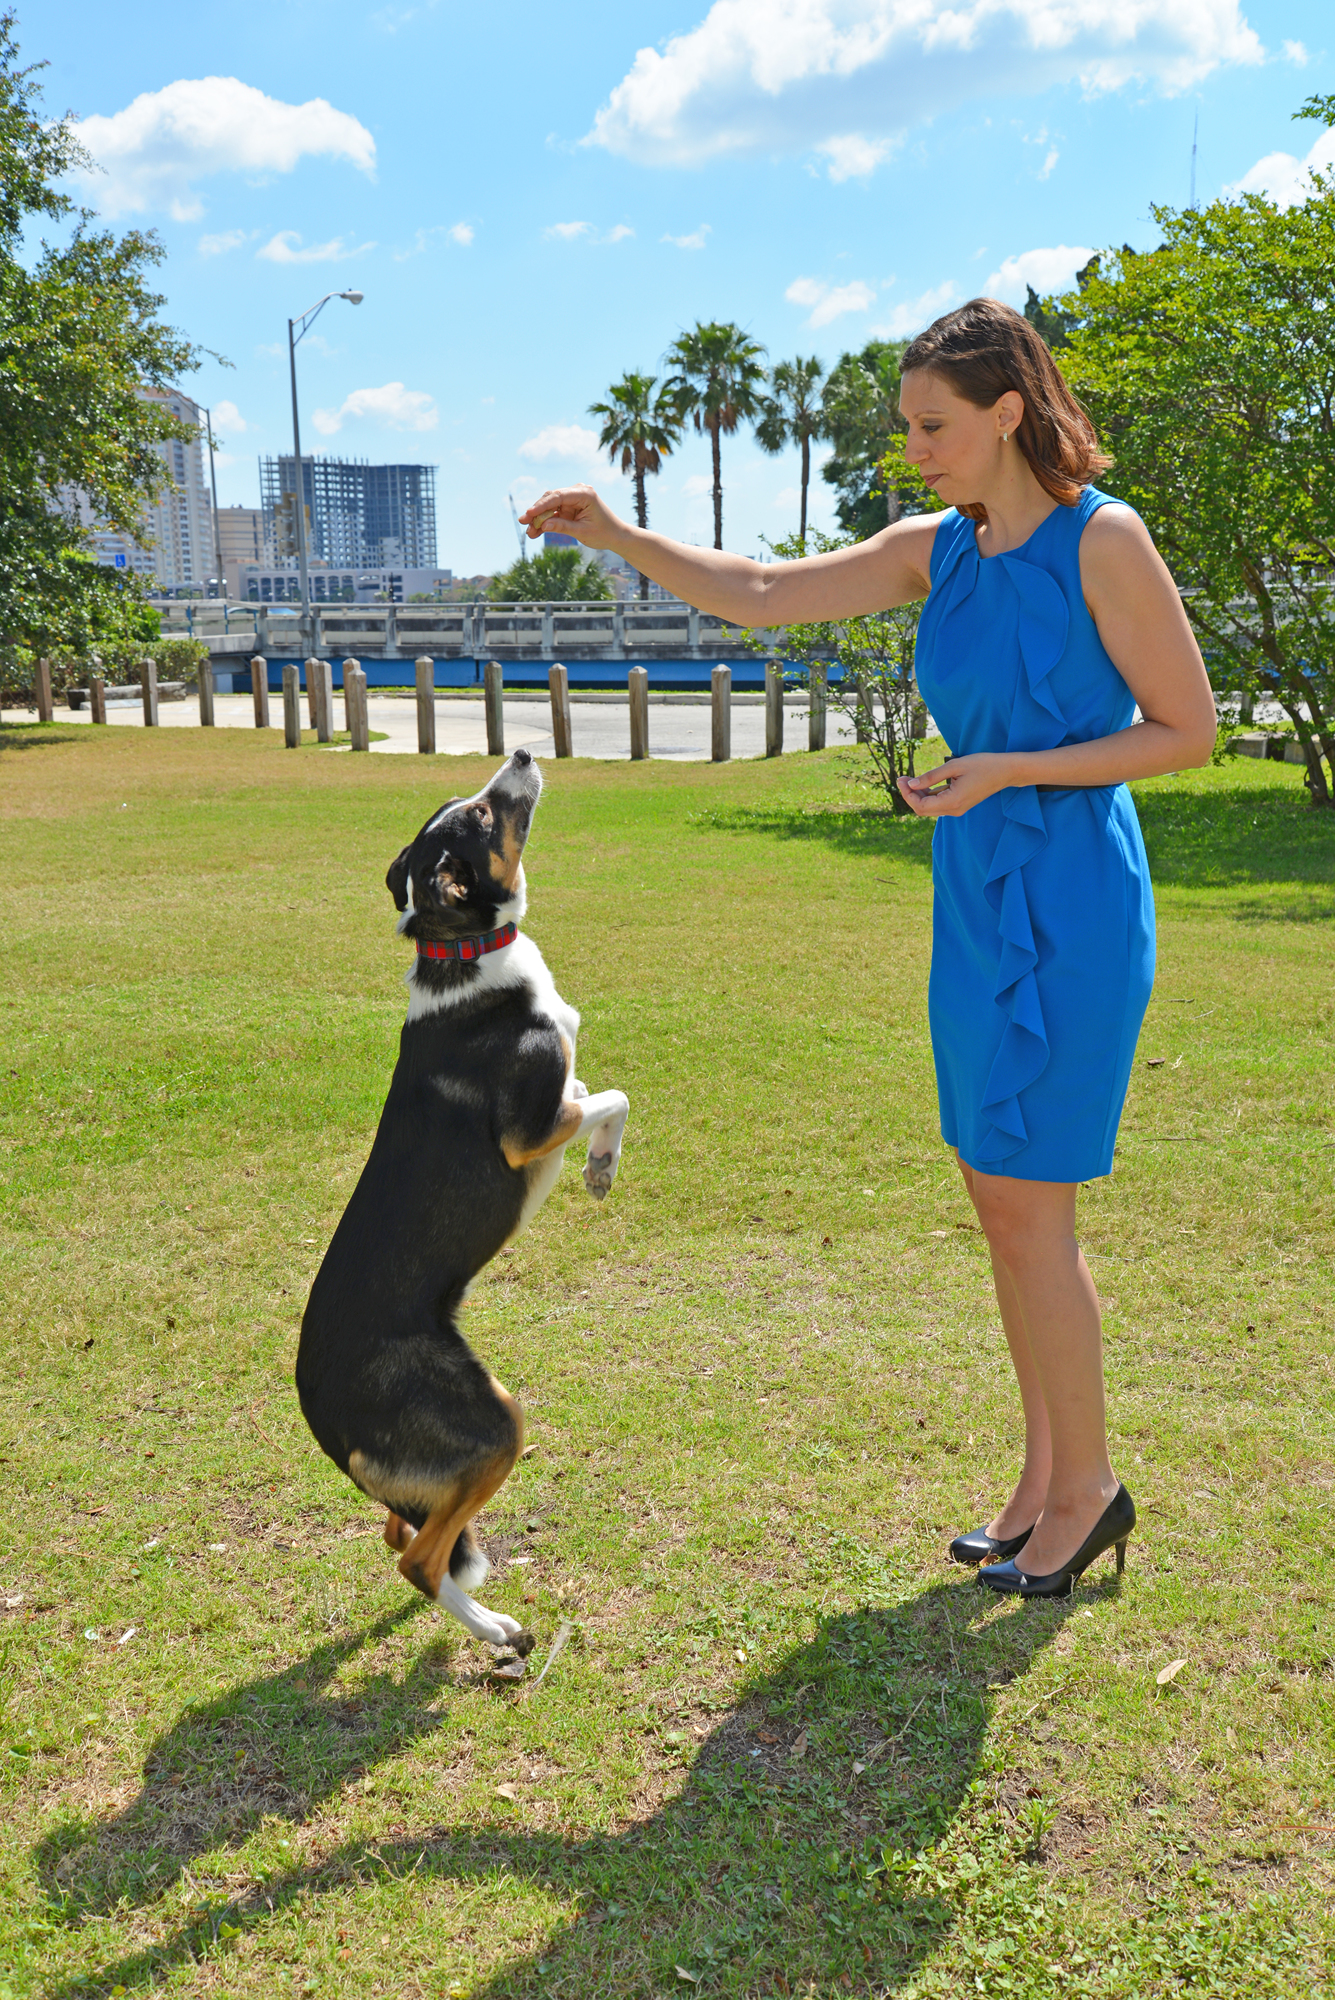 Attorney Kelly Karstaedt and her dog, Orion.